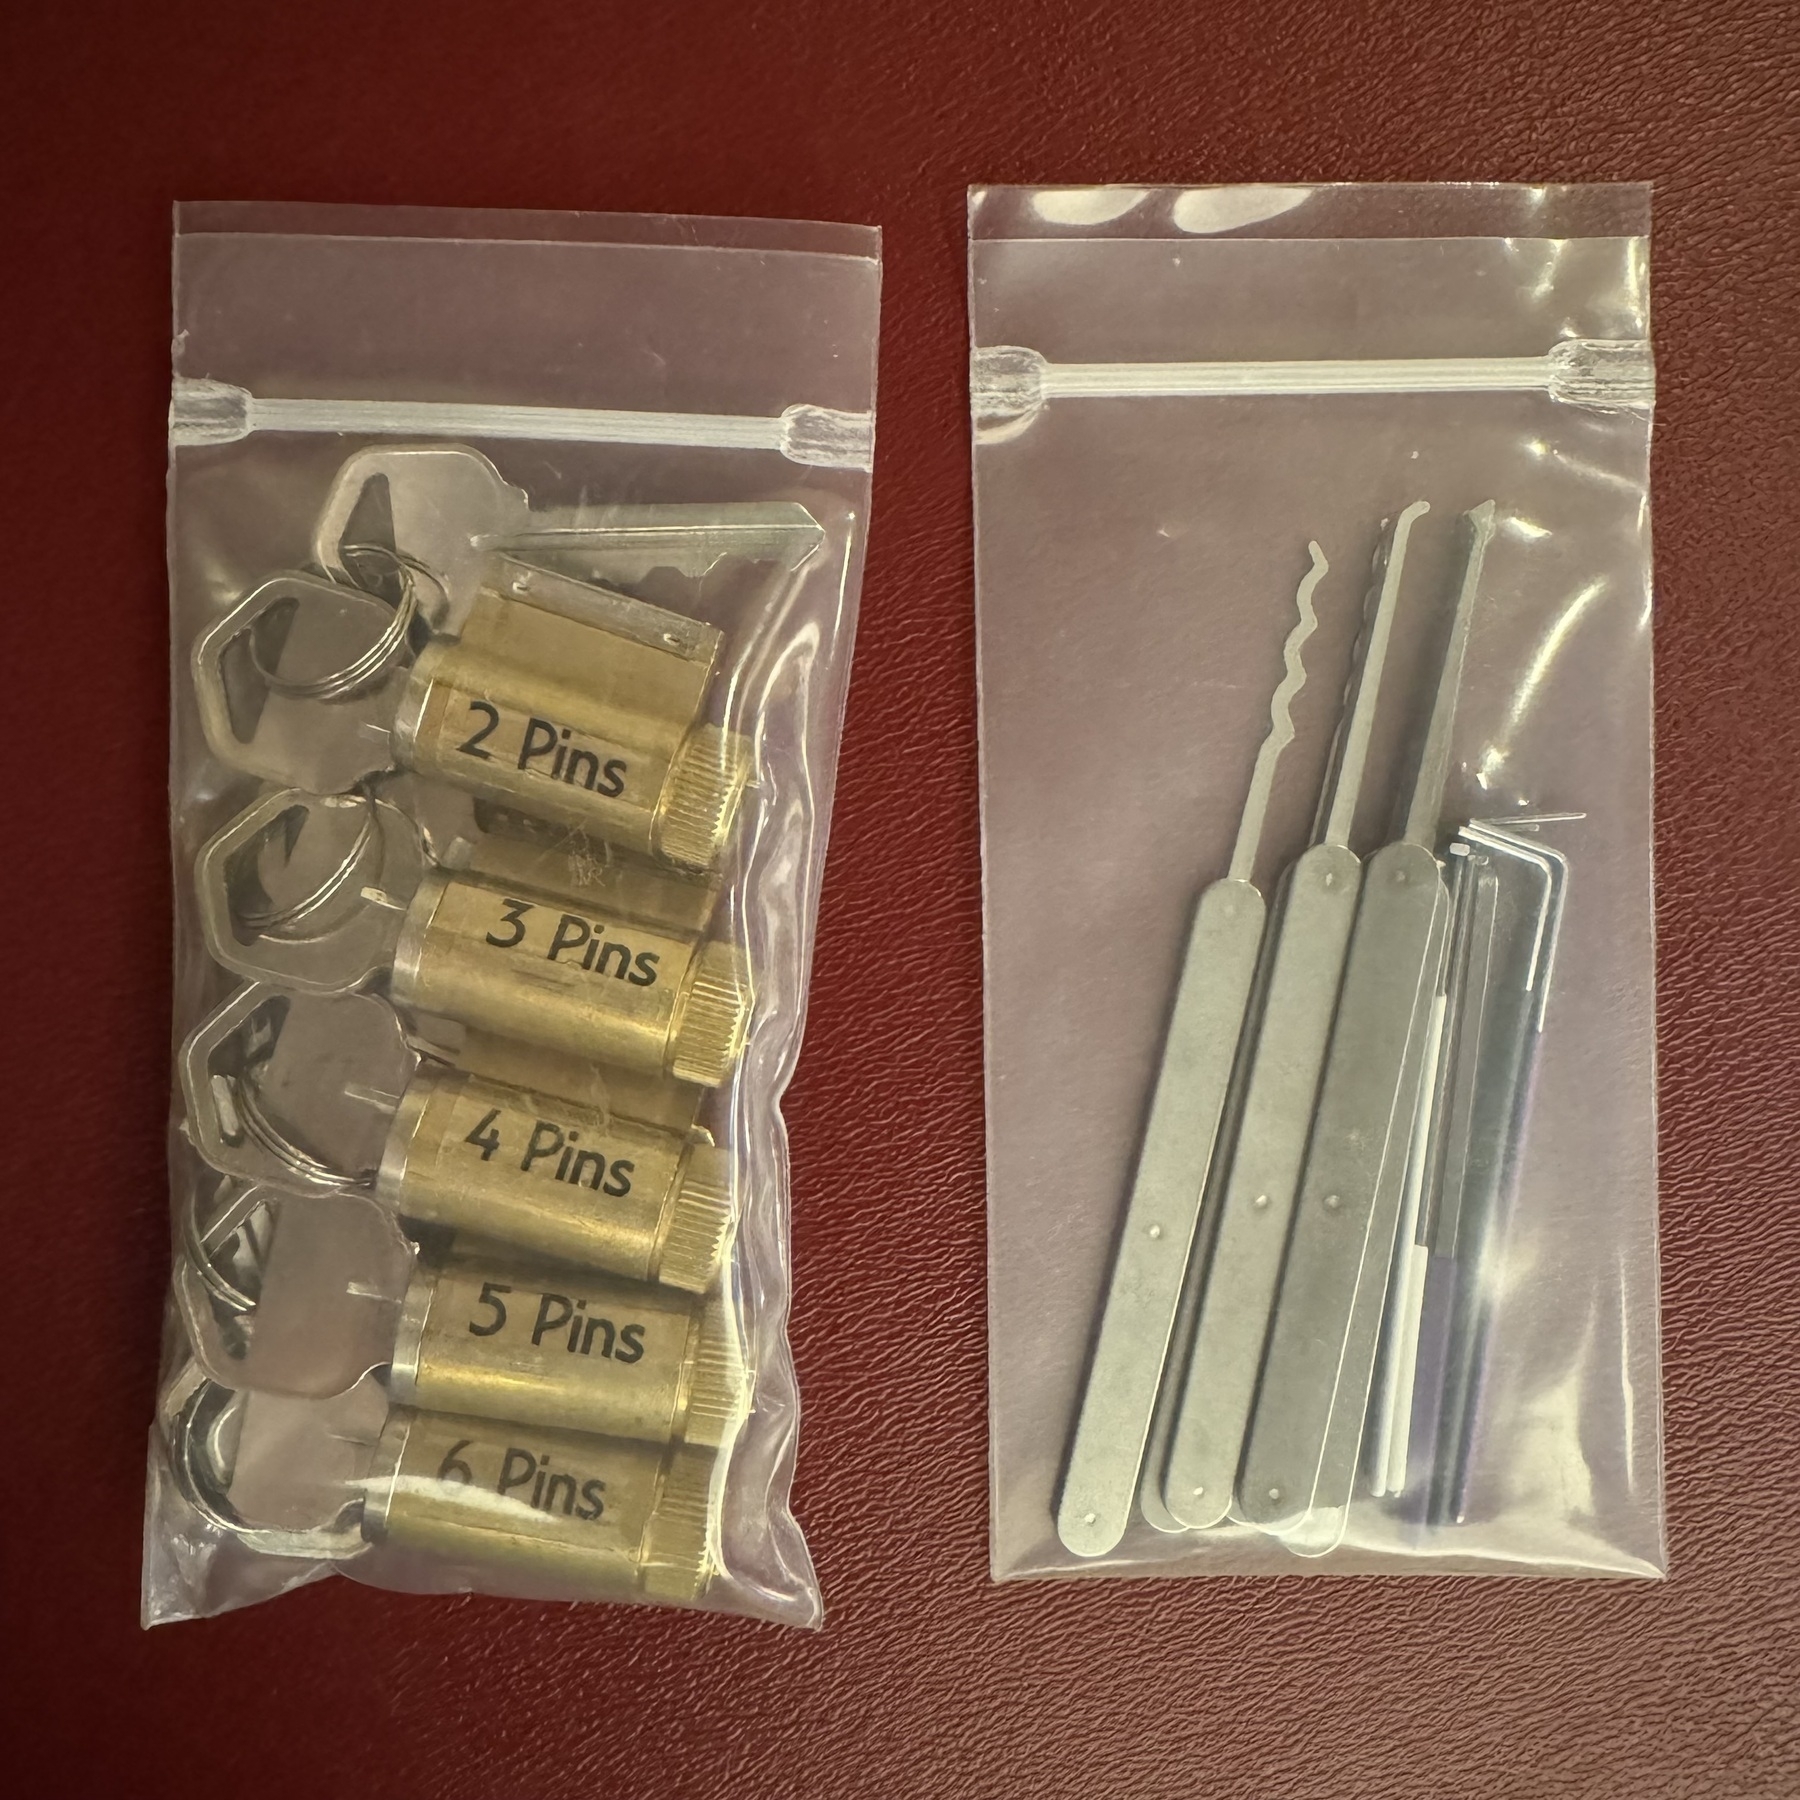 A bag of 2-6 pin tumbler locks, and a bag of assorted lock picks.